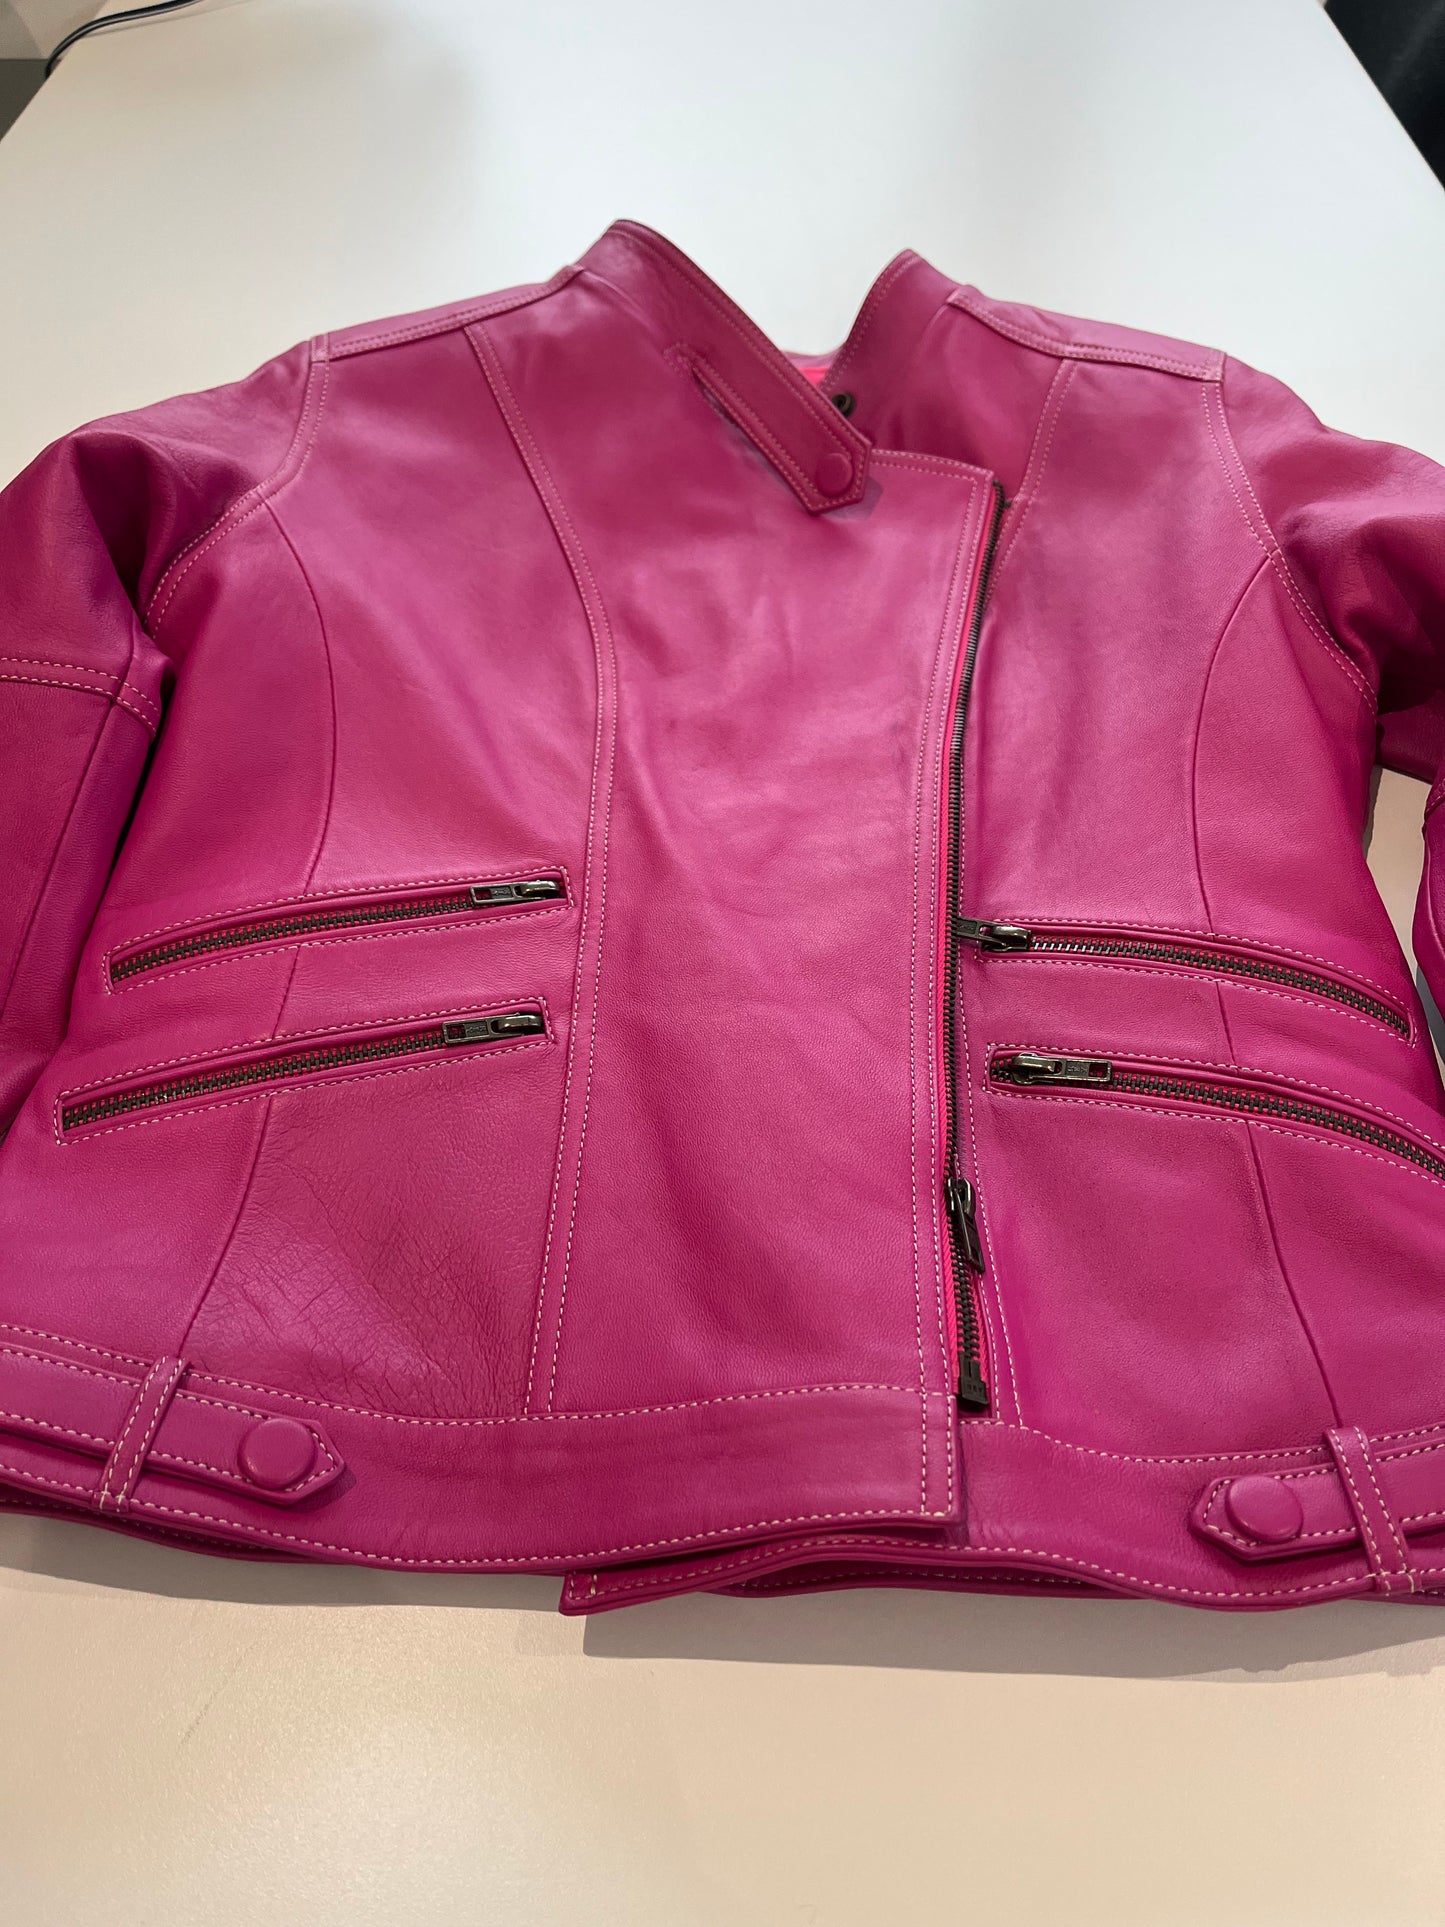 GG016: P*nk Leather Jacket